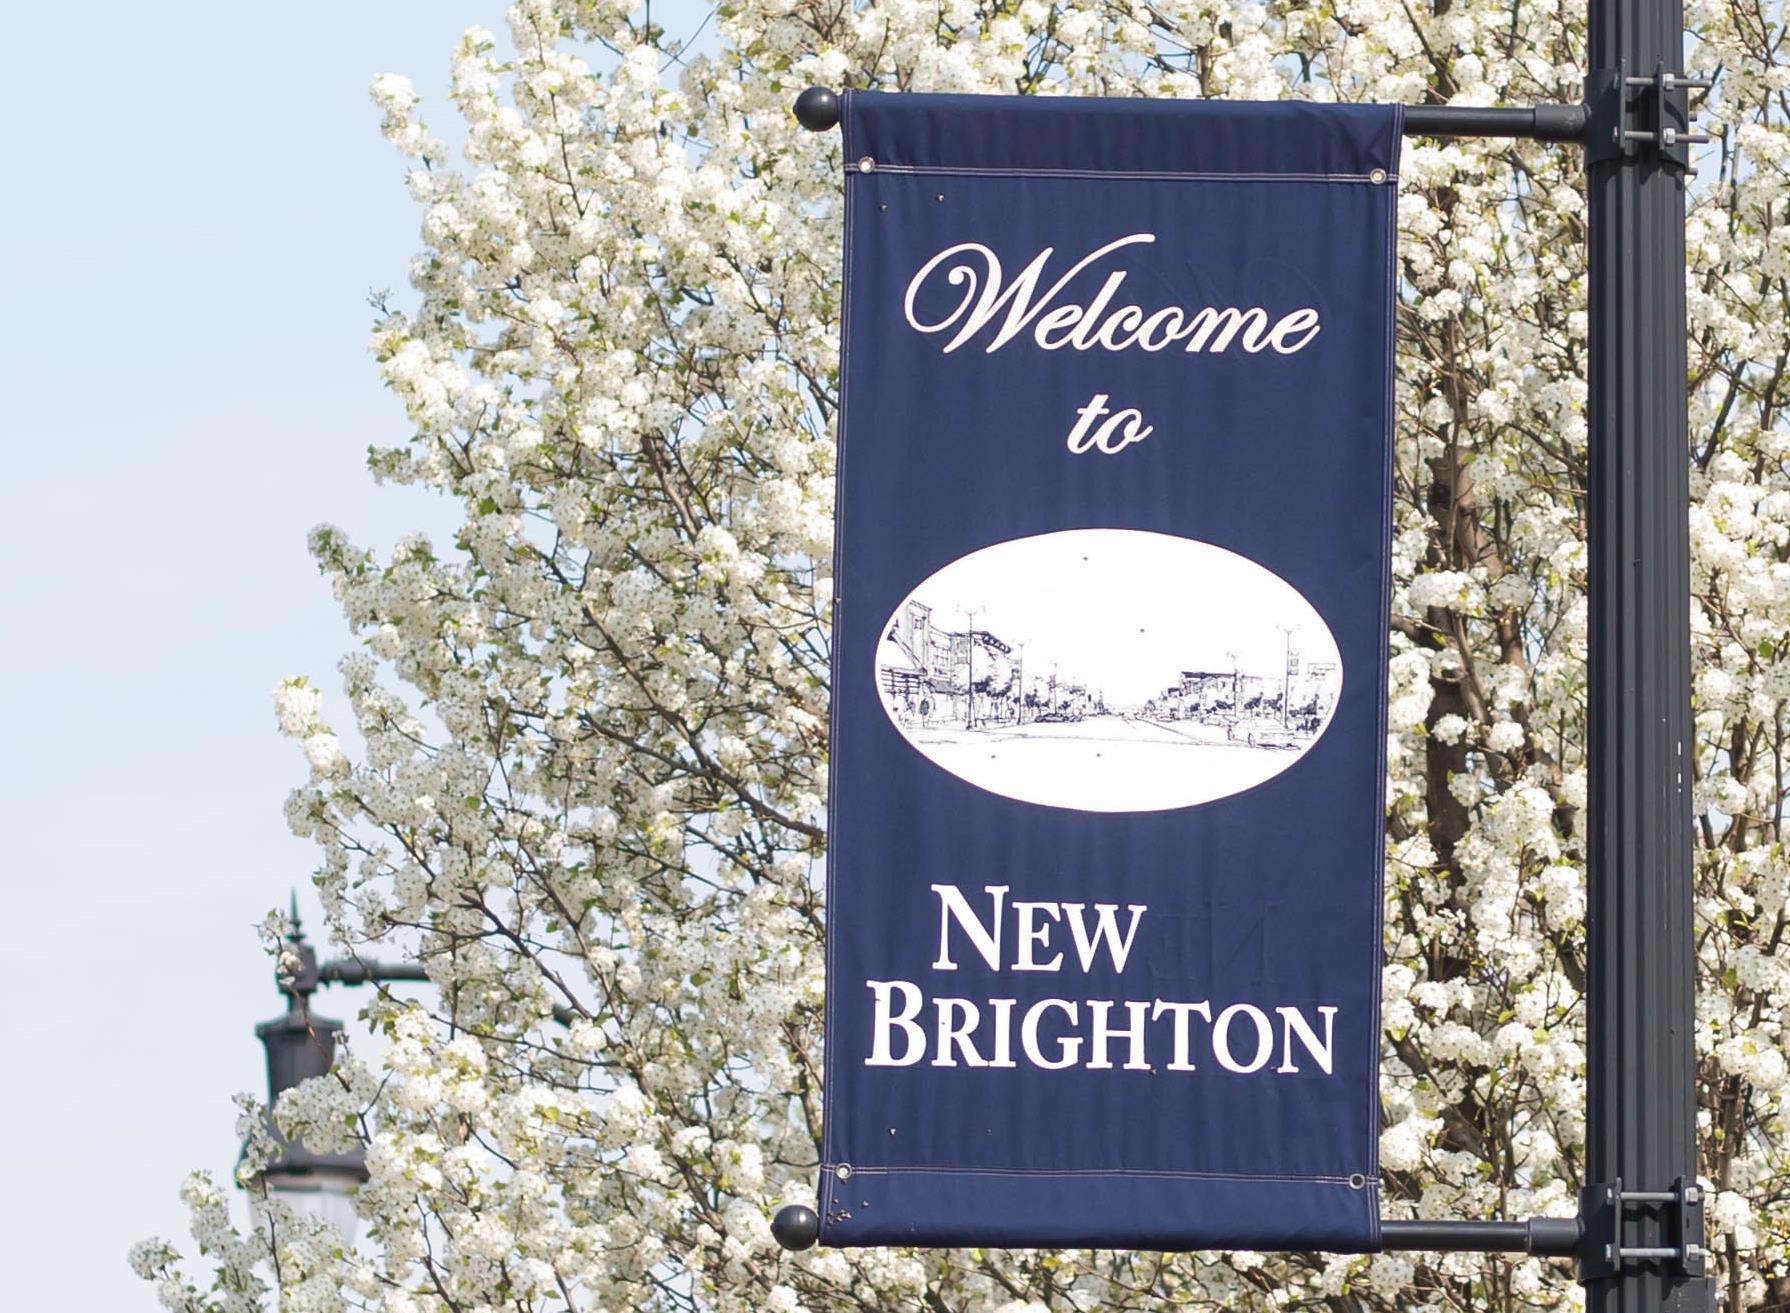 New Brighton Borough